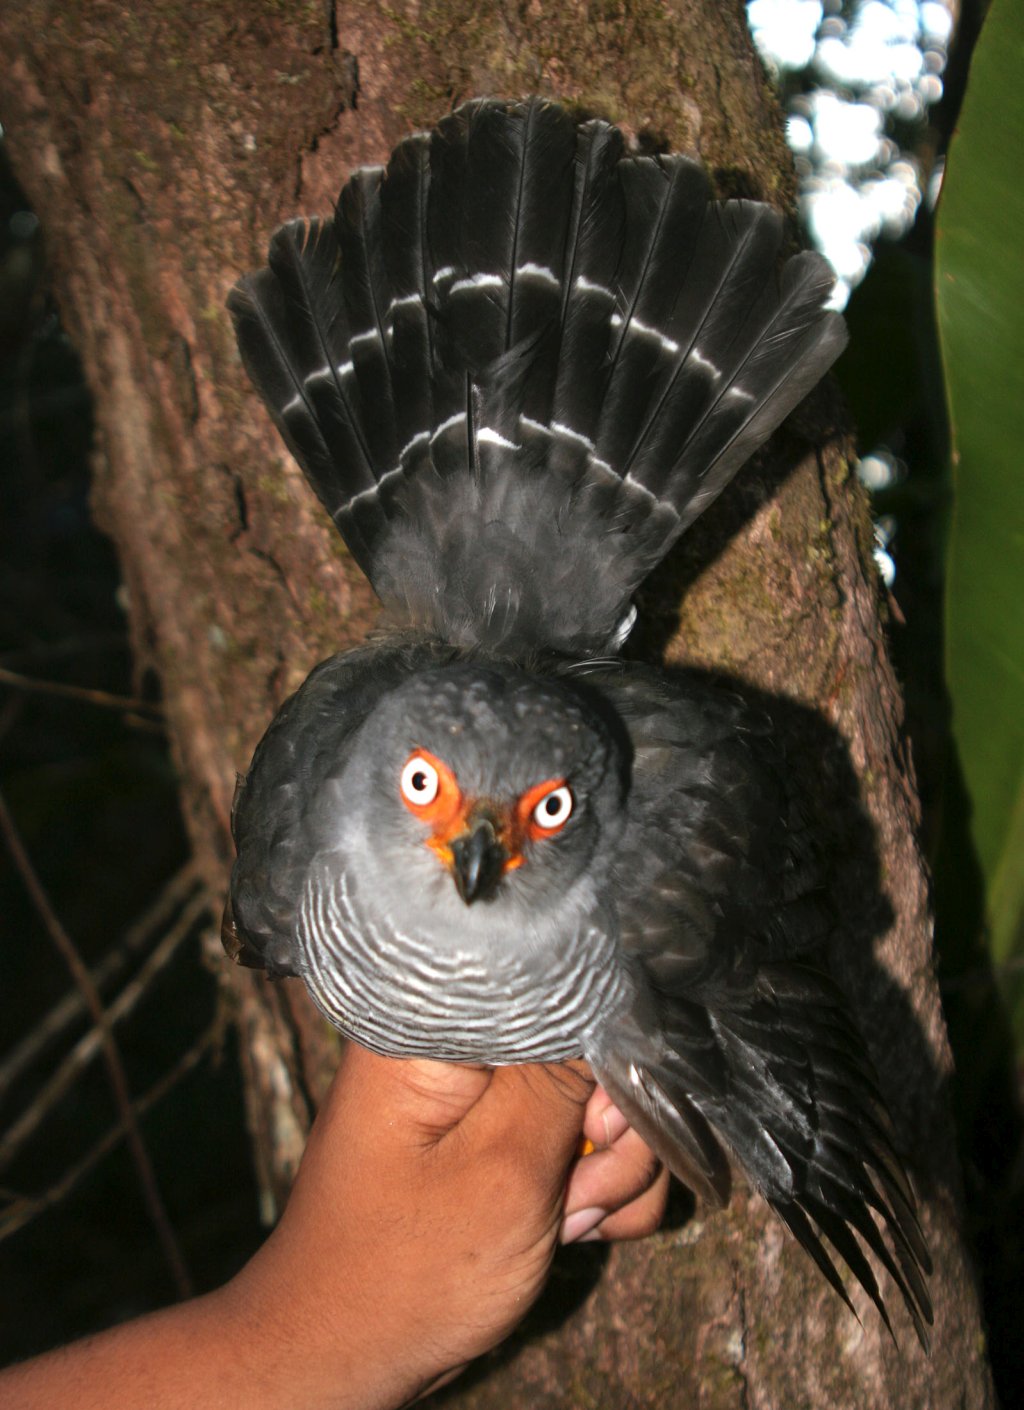 Micrastur gilvicollis, Lined Forest-Falcon,  door Kristof Zyskowski